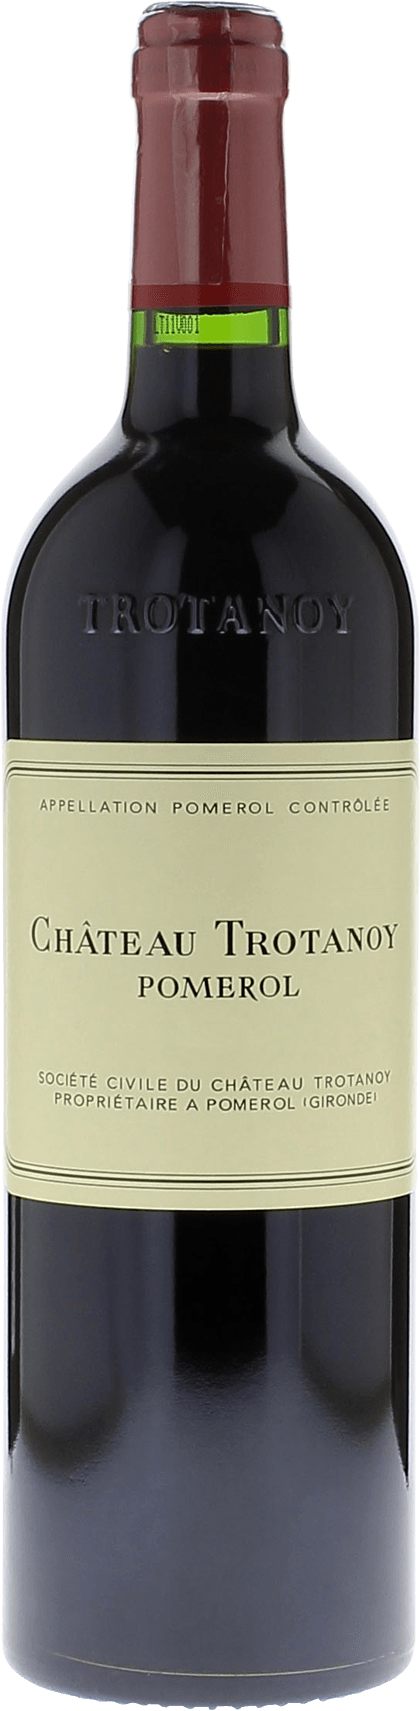 Trotanoy 1970  Pomerol, Bordeaux rouge